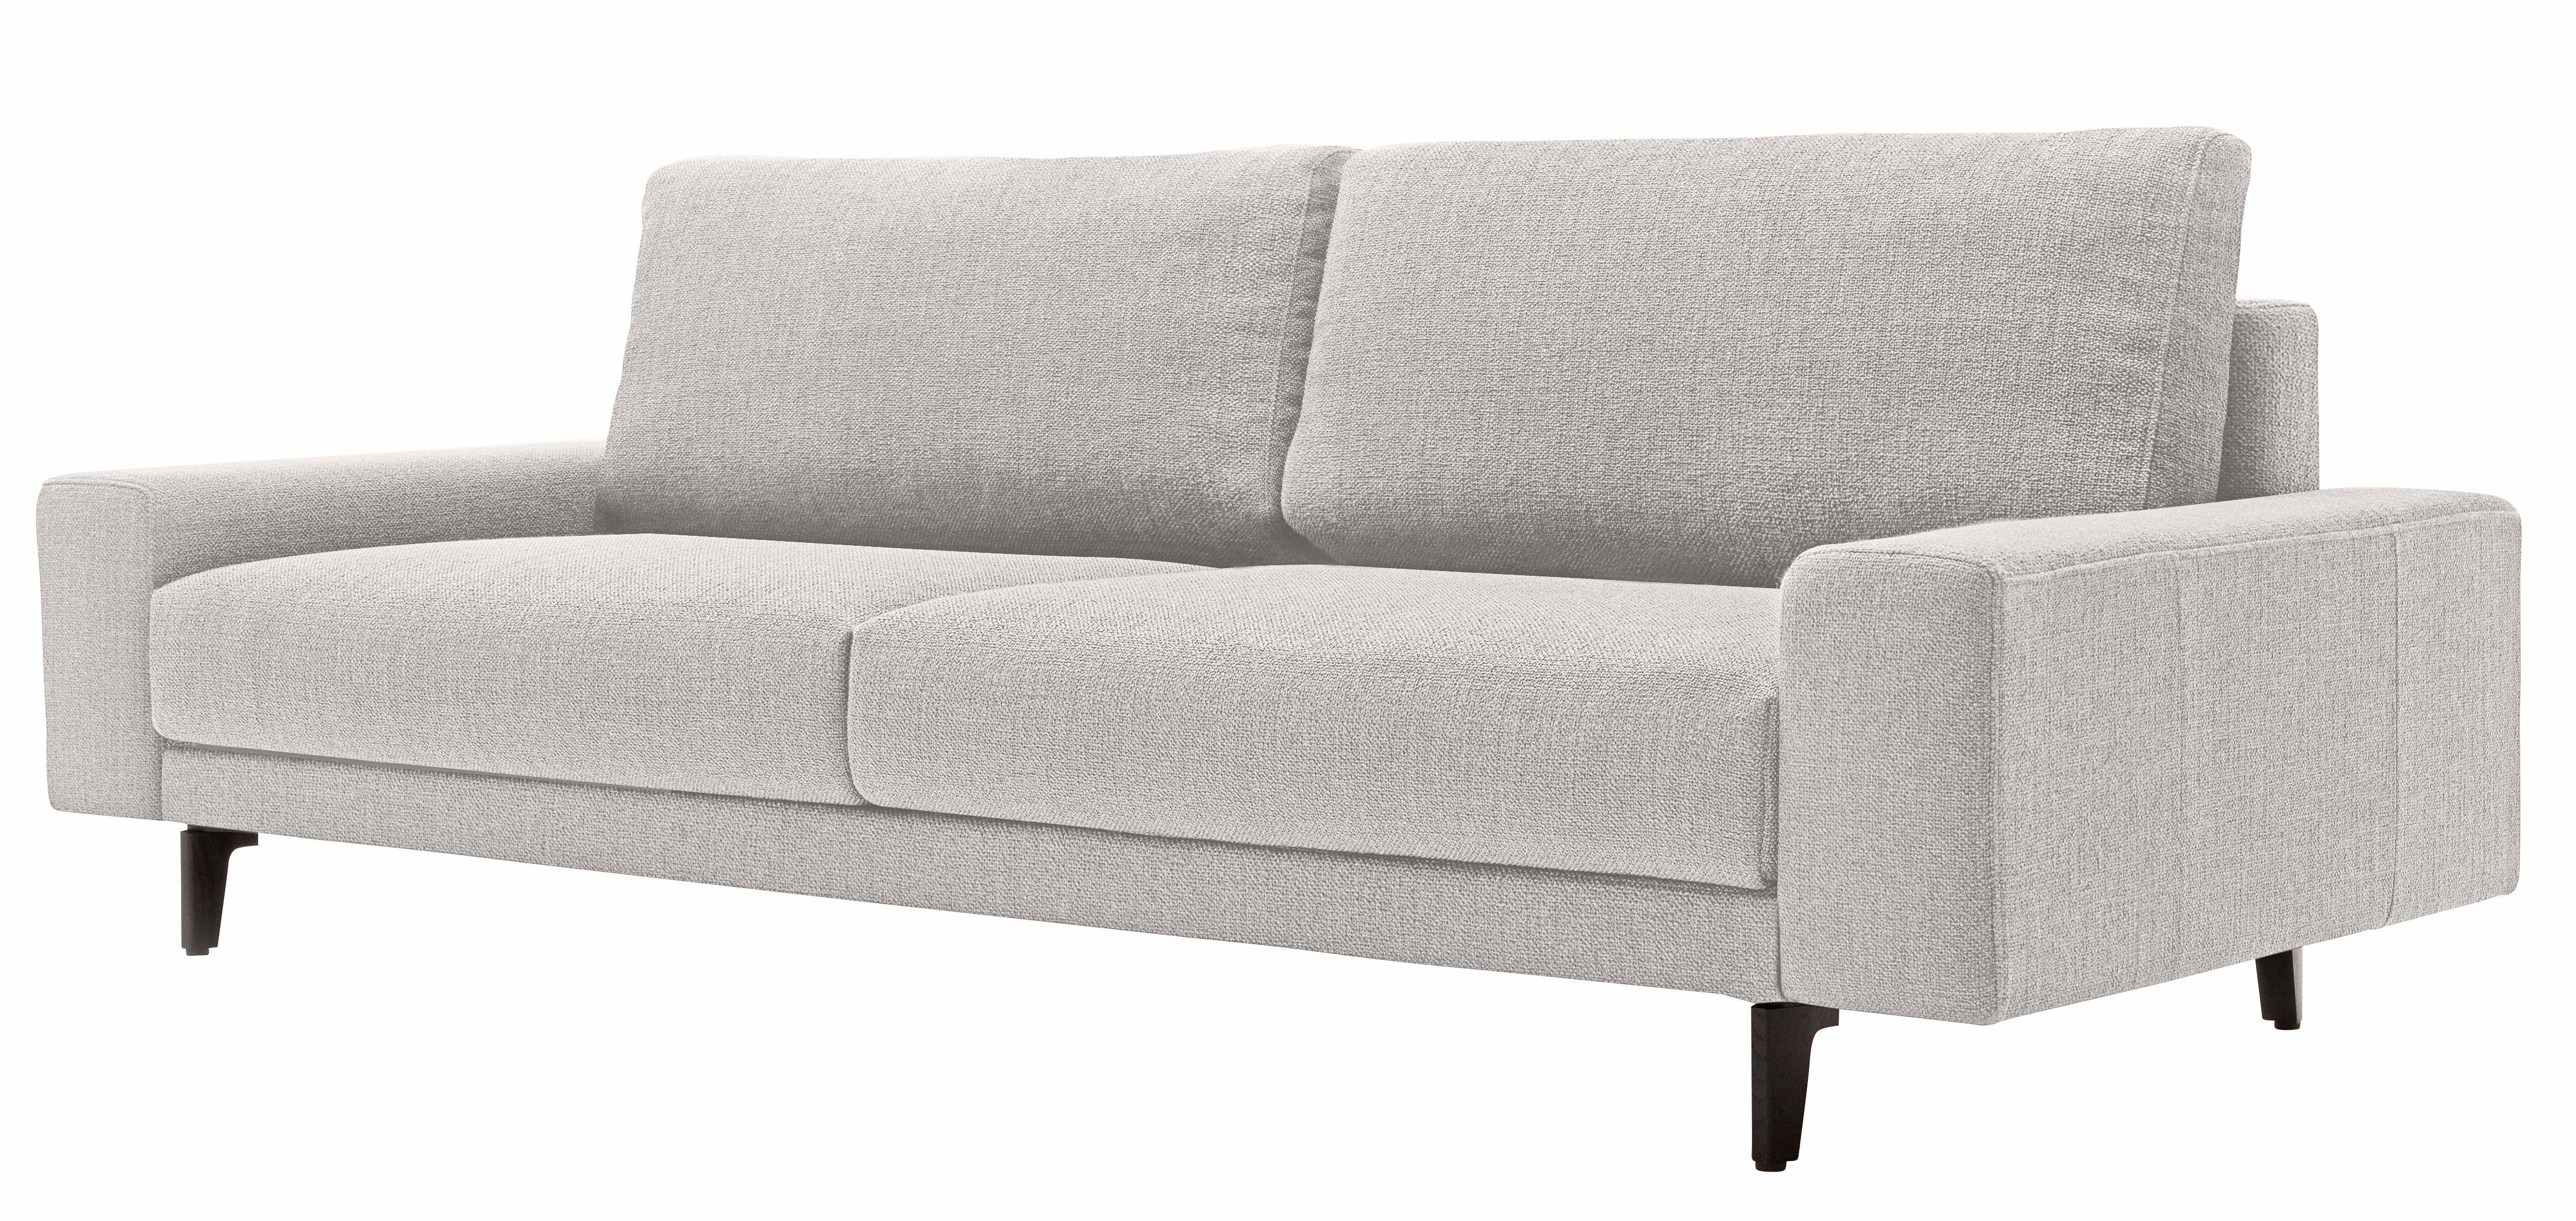 umbragrau, hs.450, 3-Sitzer niedrig, 220 sofa Armlehne hülsta Alugussfüße cm Breite in breit